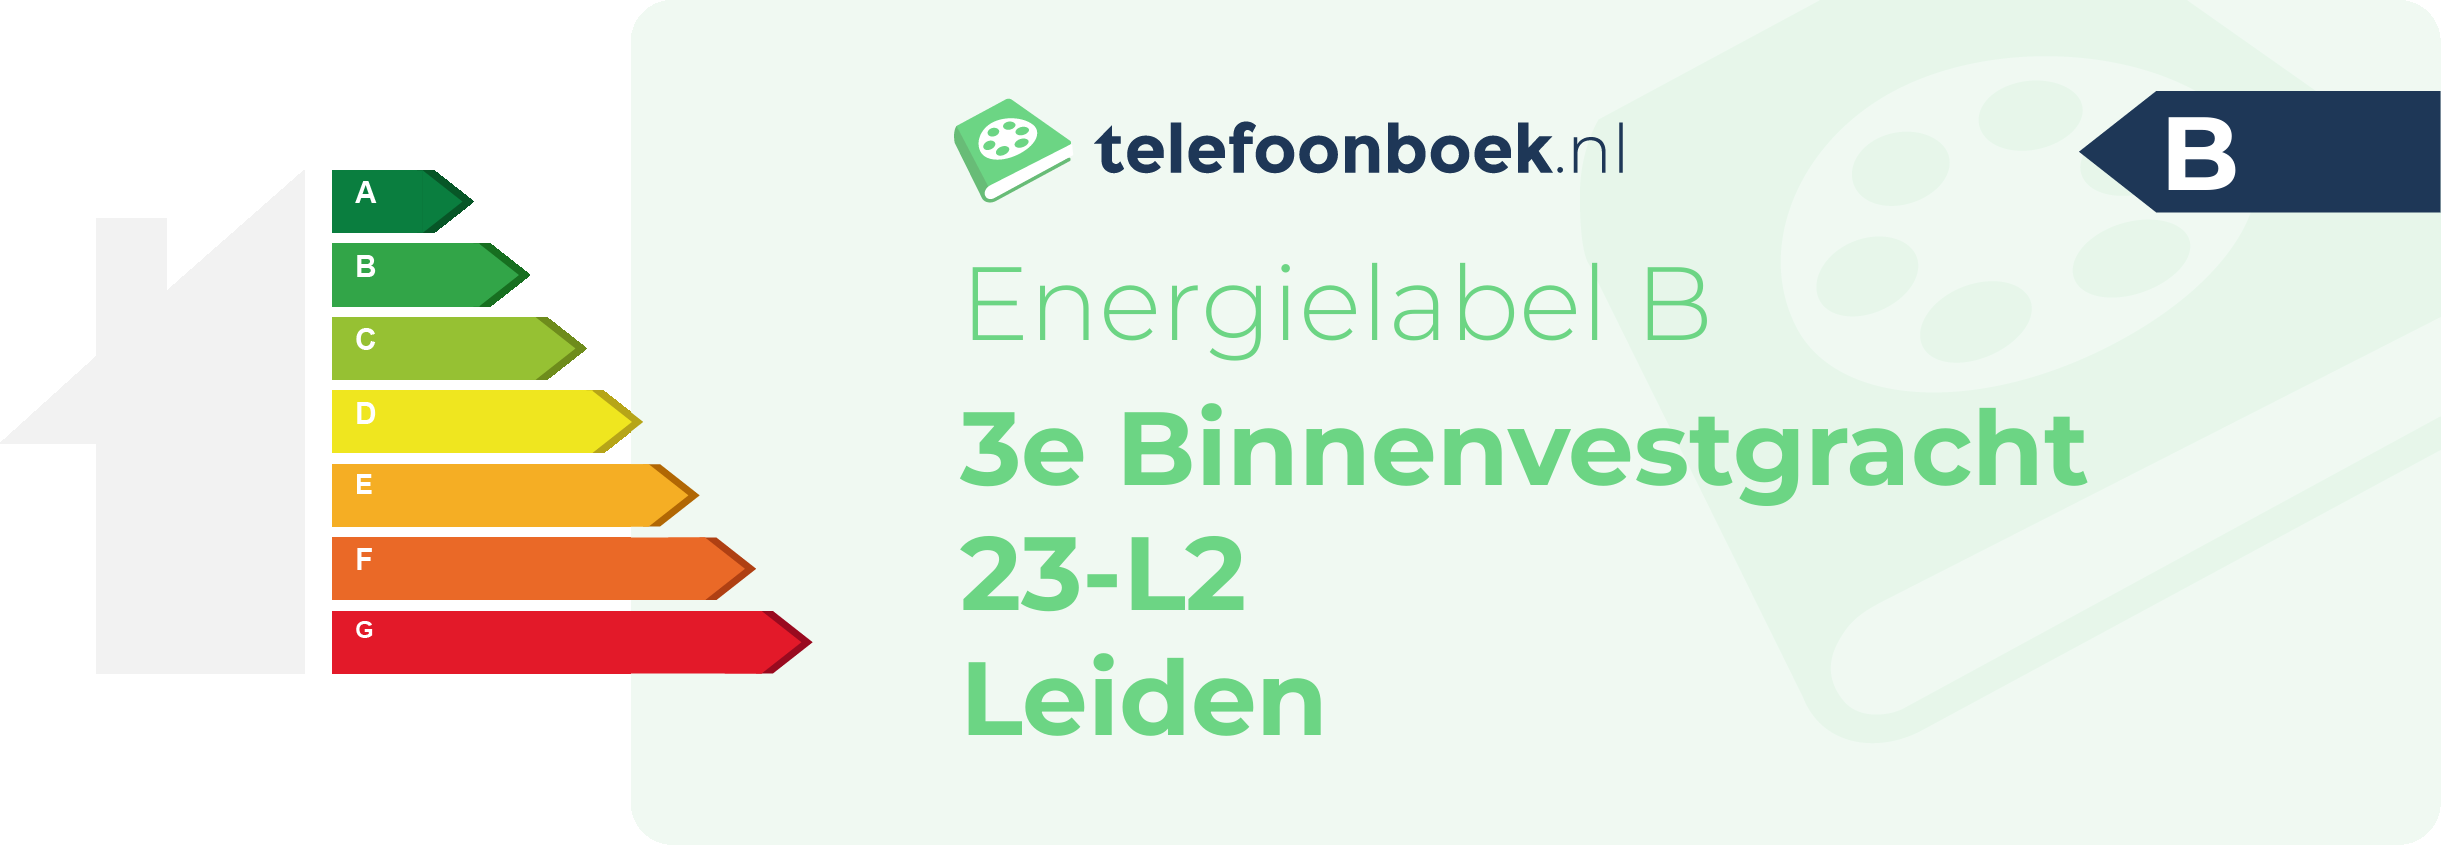 Energielabel 3e Binnenvestgracht 23-L2 Leiden